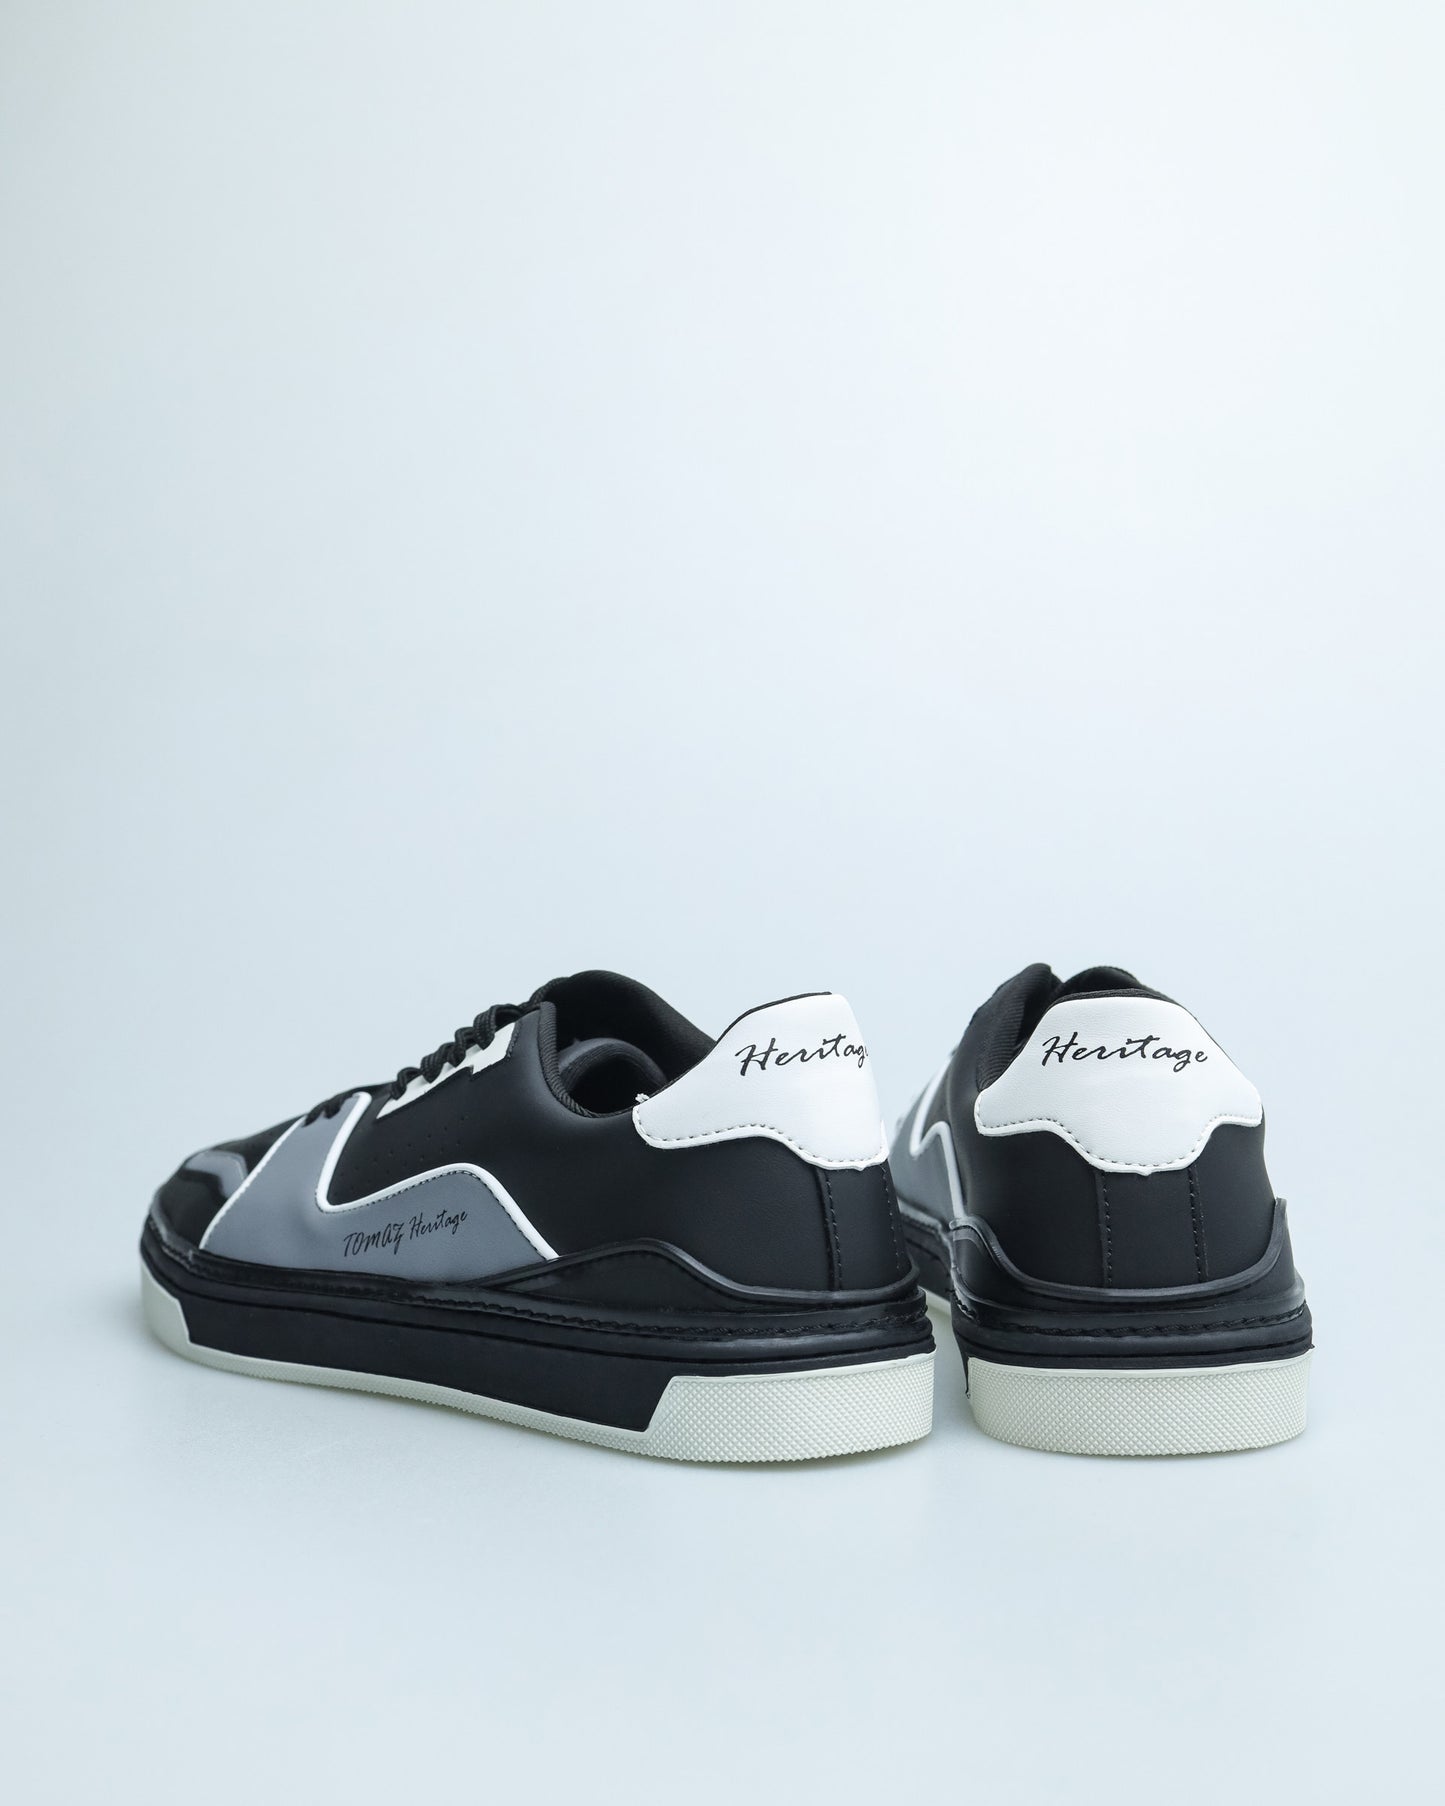 Tomaz TY006 Men's Court Sneakers (Black/Grey)